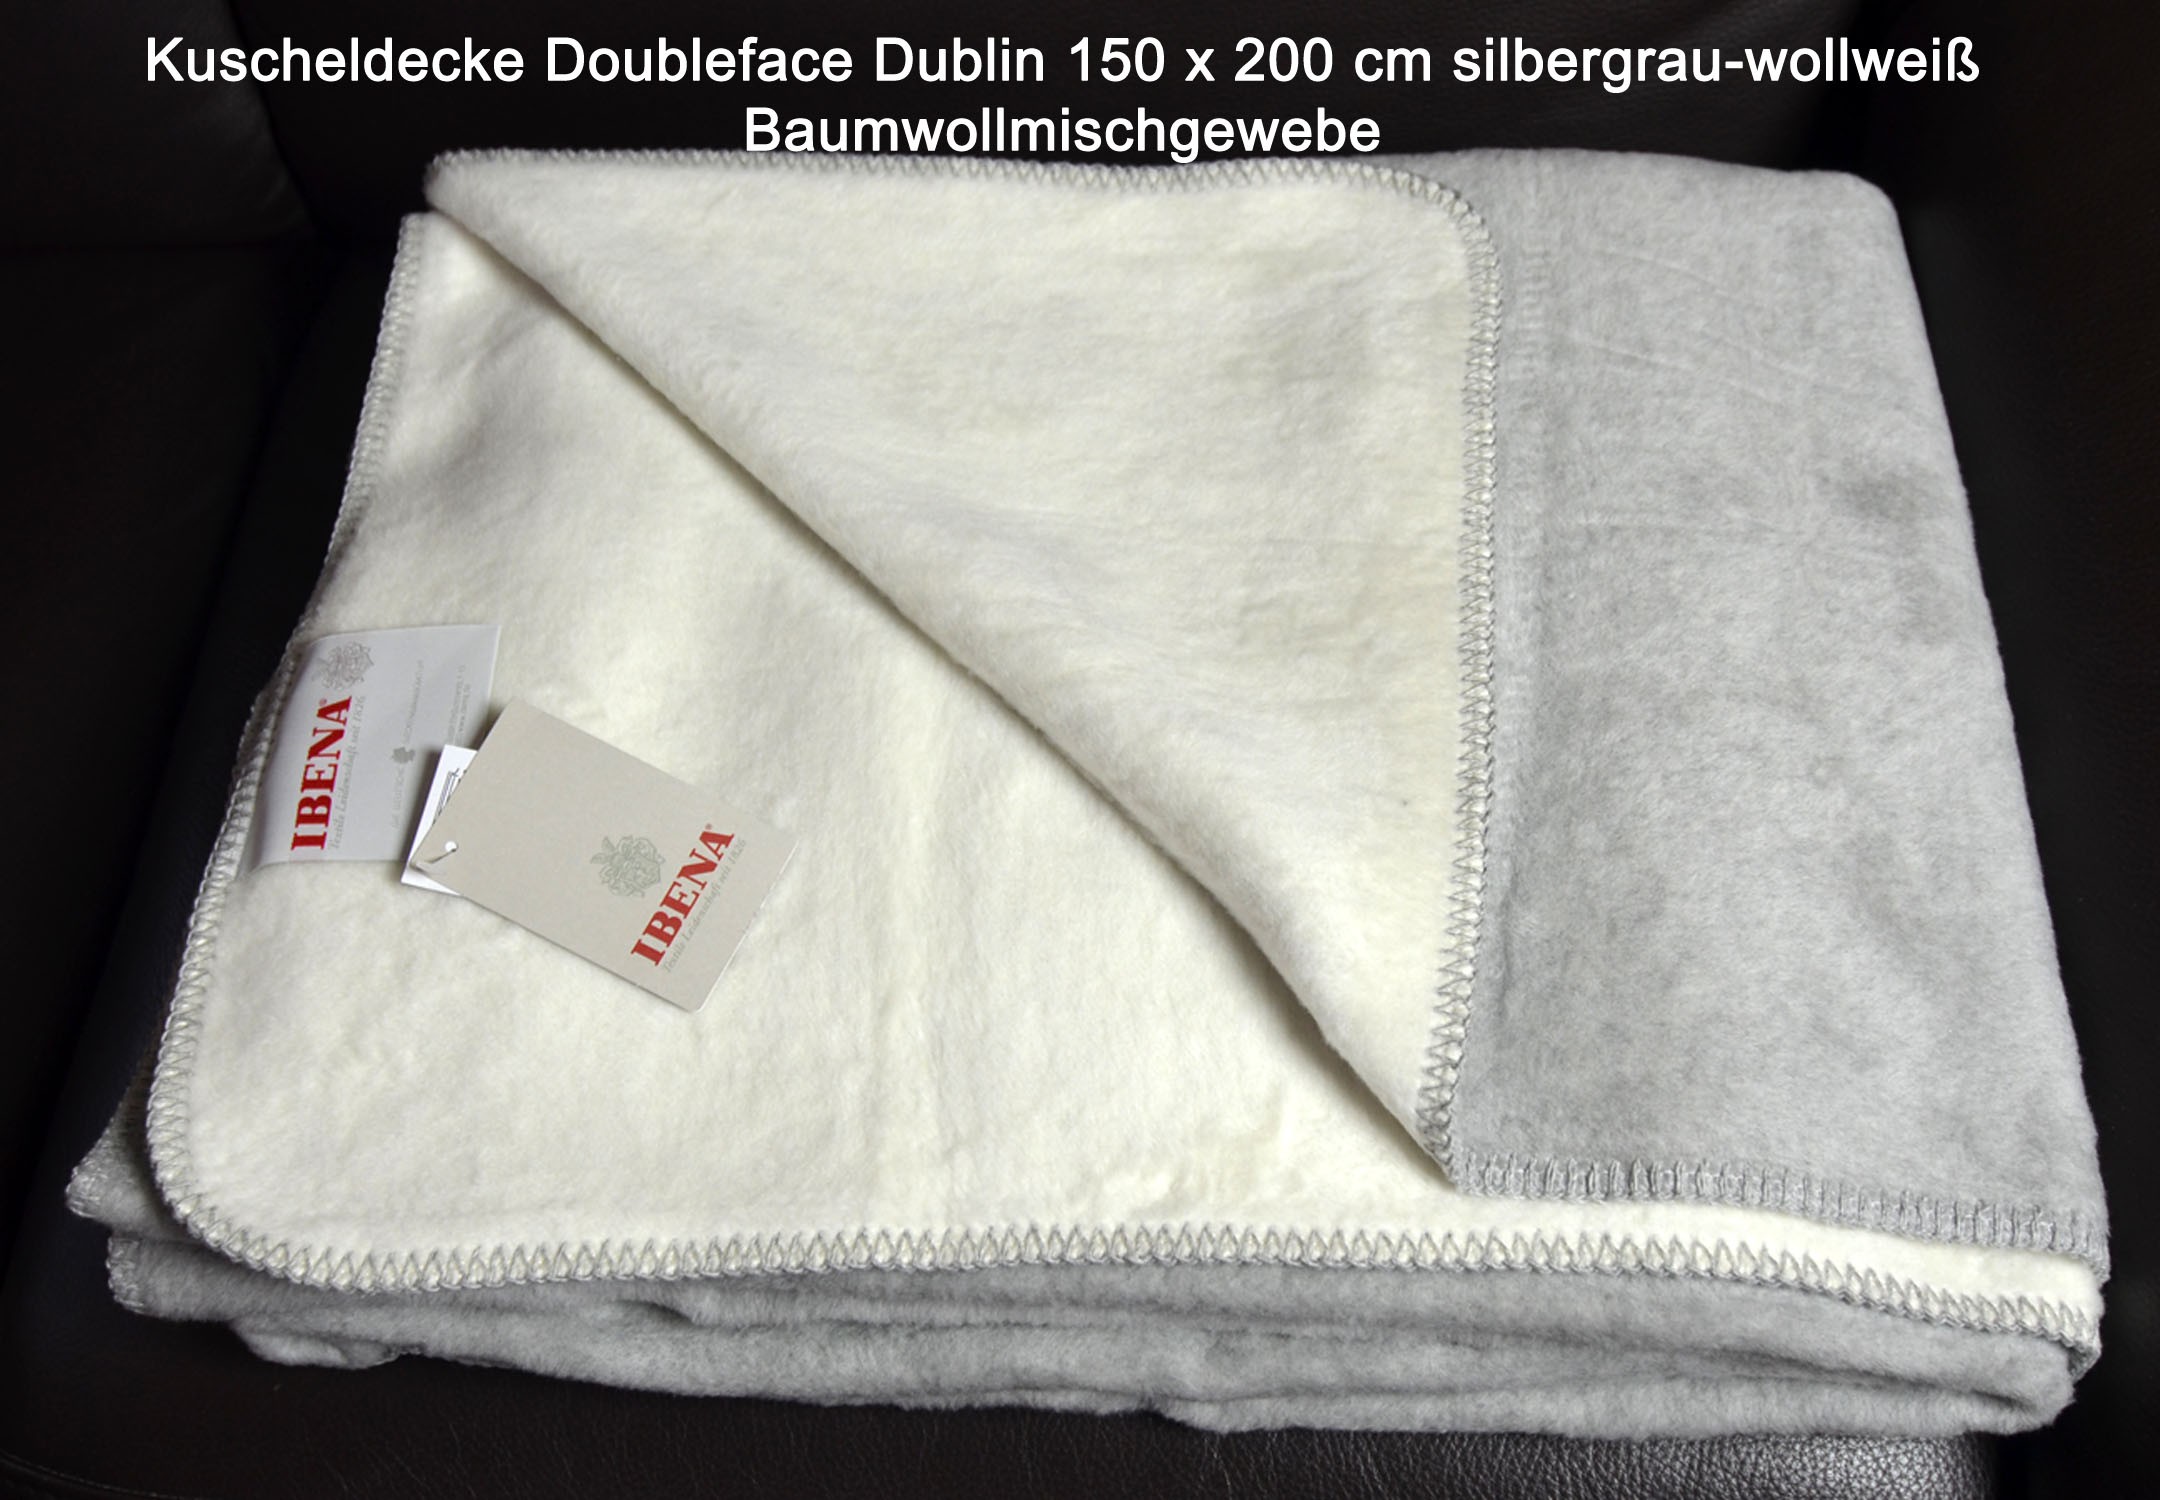 Kuscheldecke Doubleface Dublin 150 x 200 cm silbergau-wollweiß Bw-mischgewebe